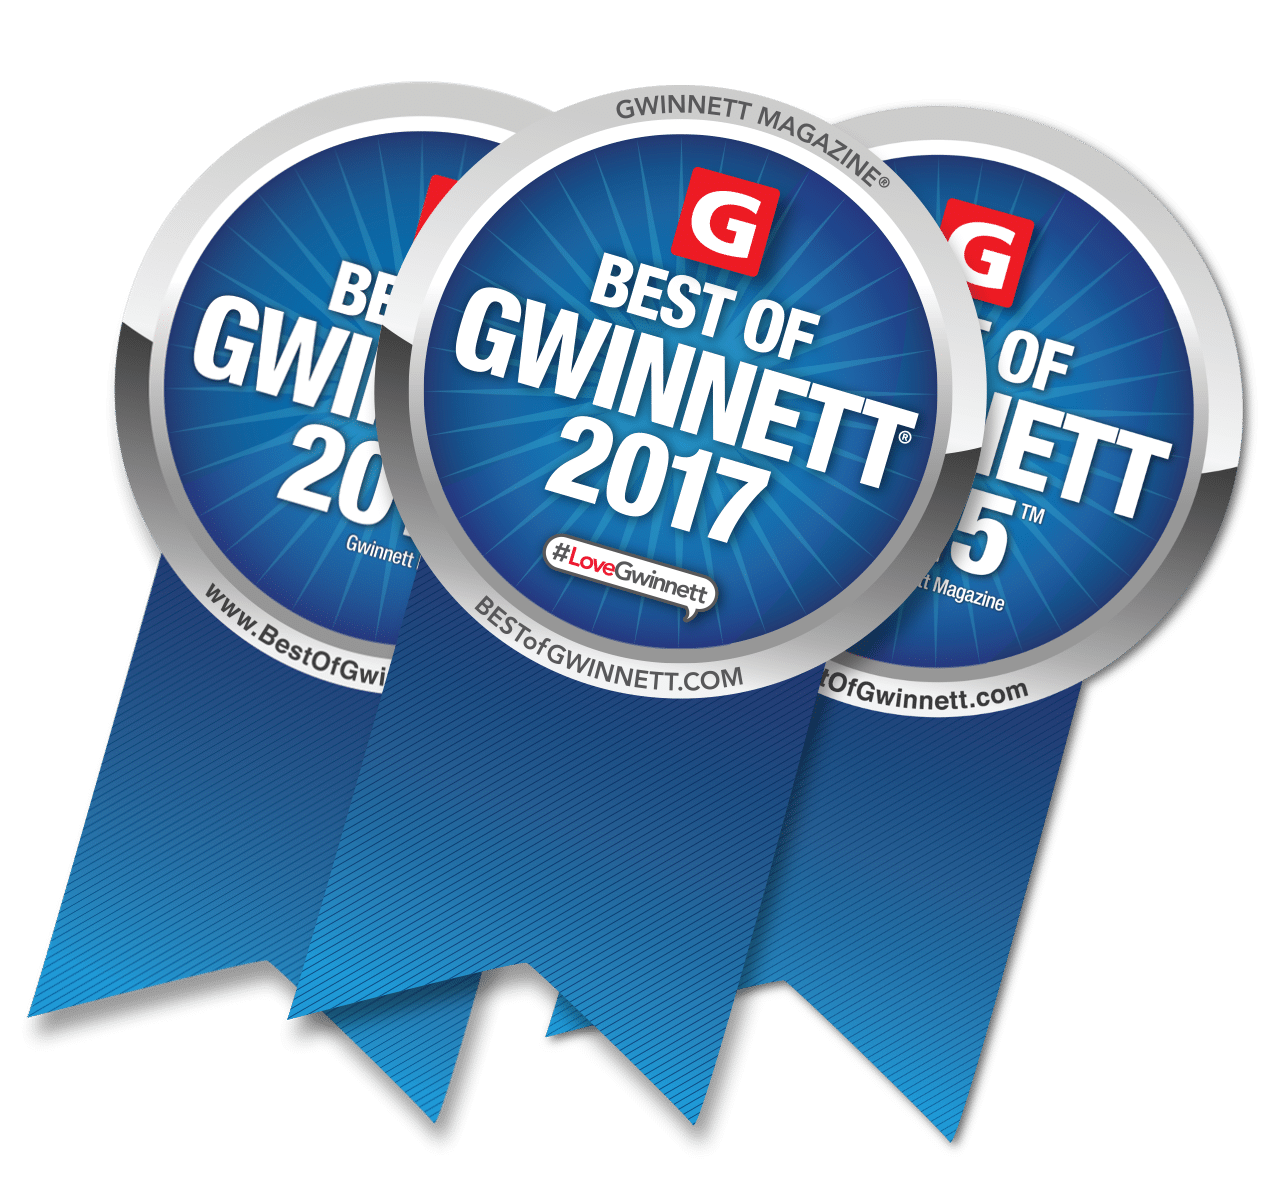 Voted Best of Gwinnett 2015!